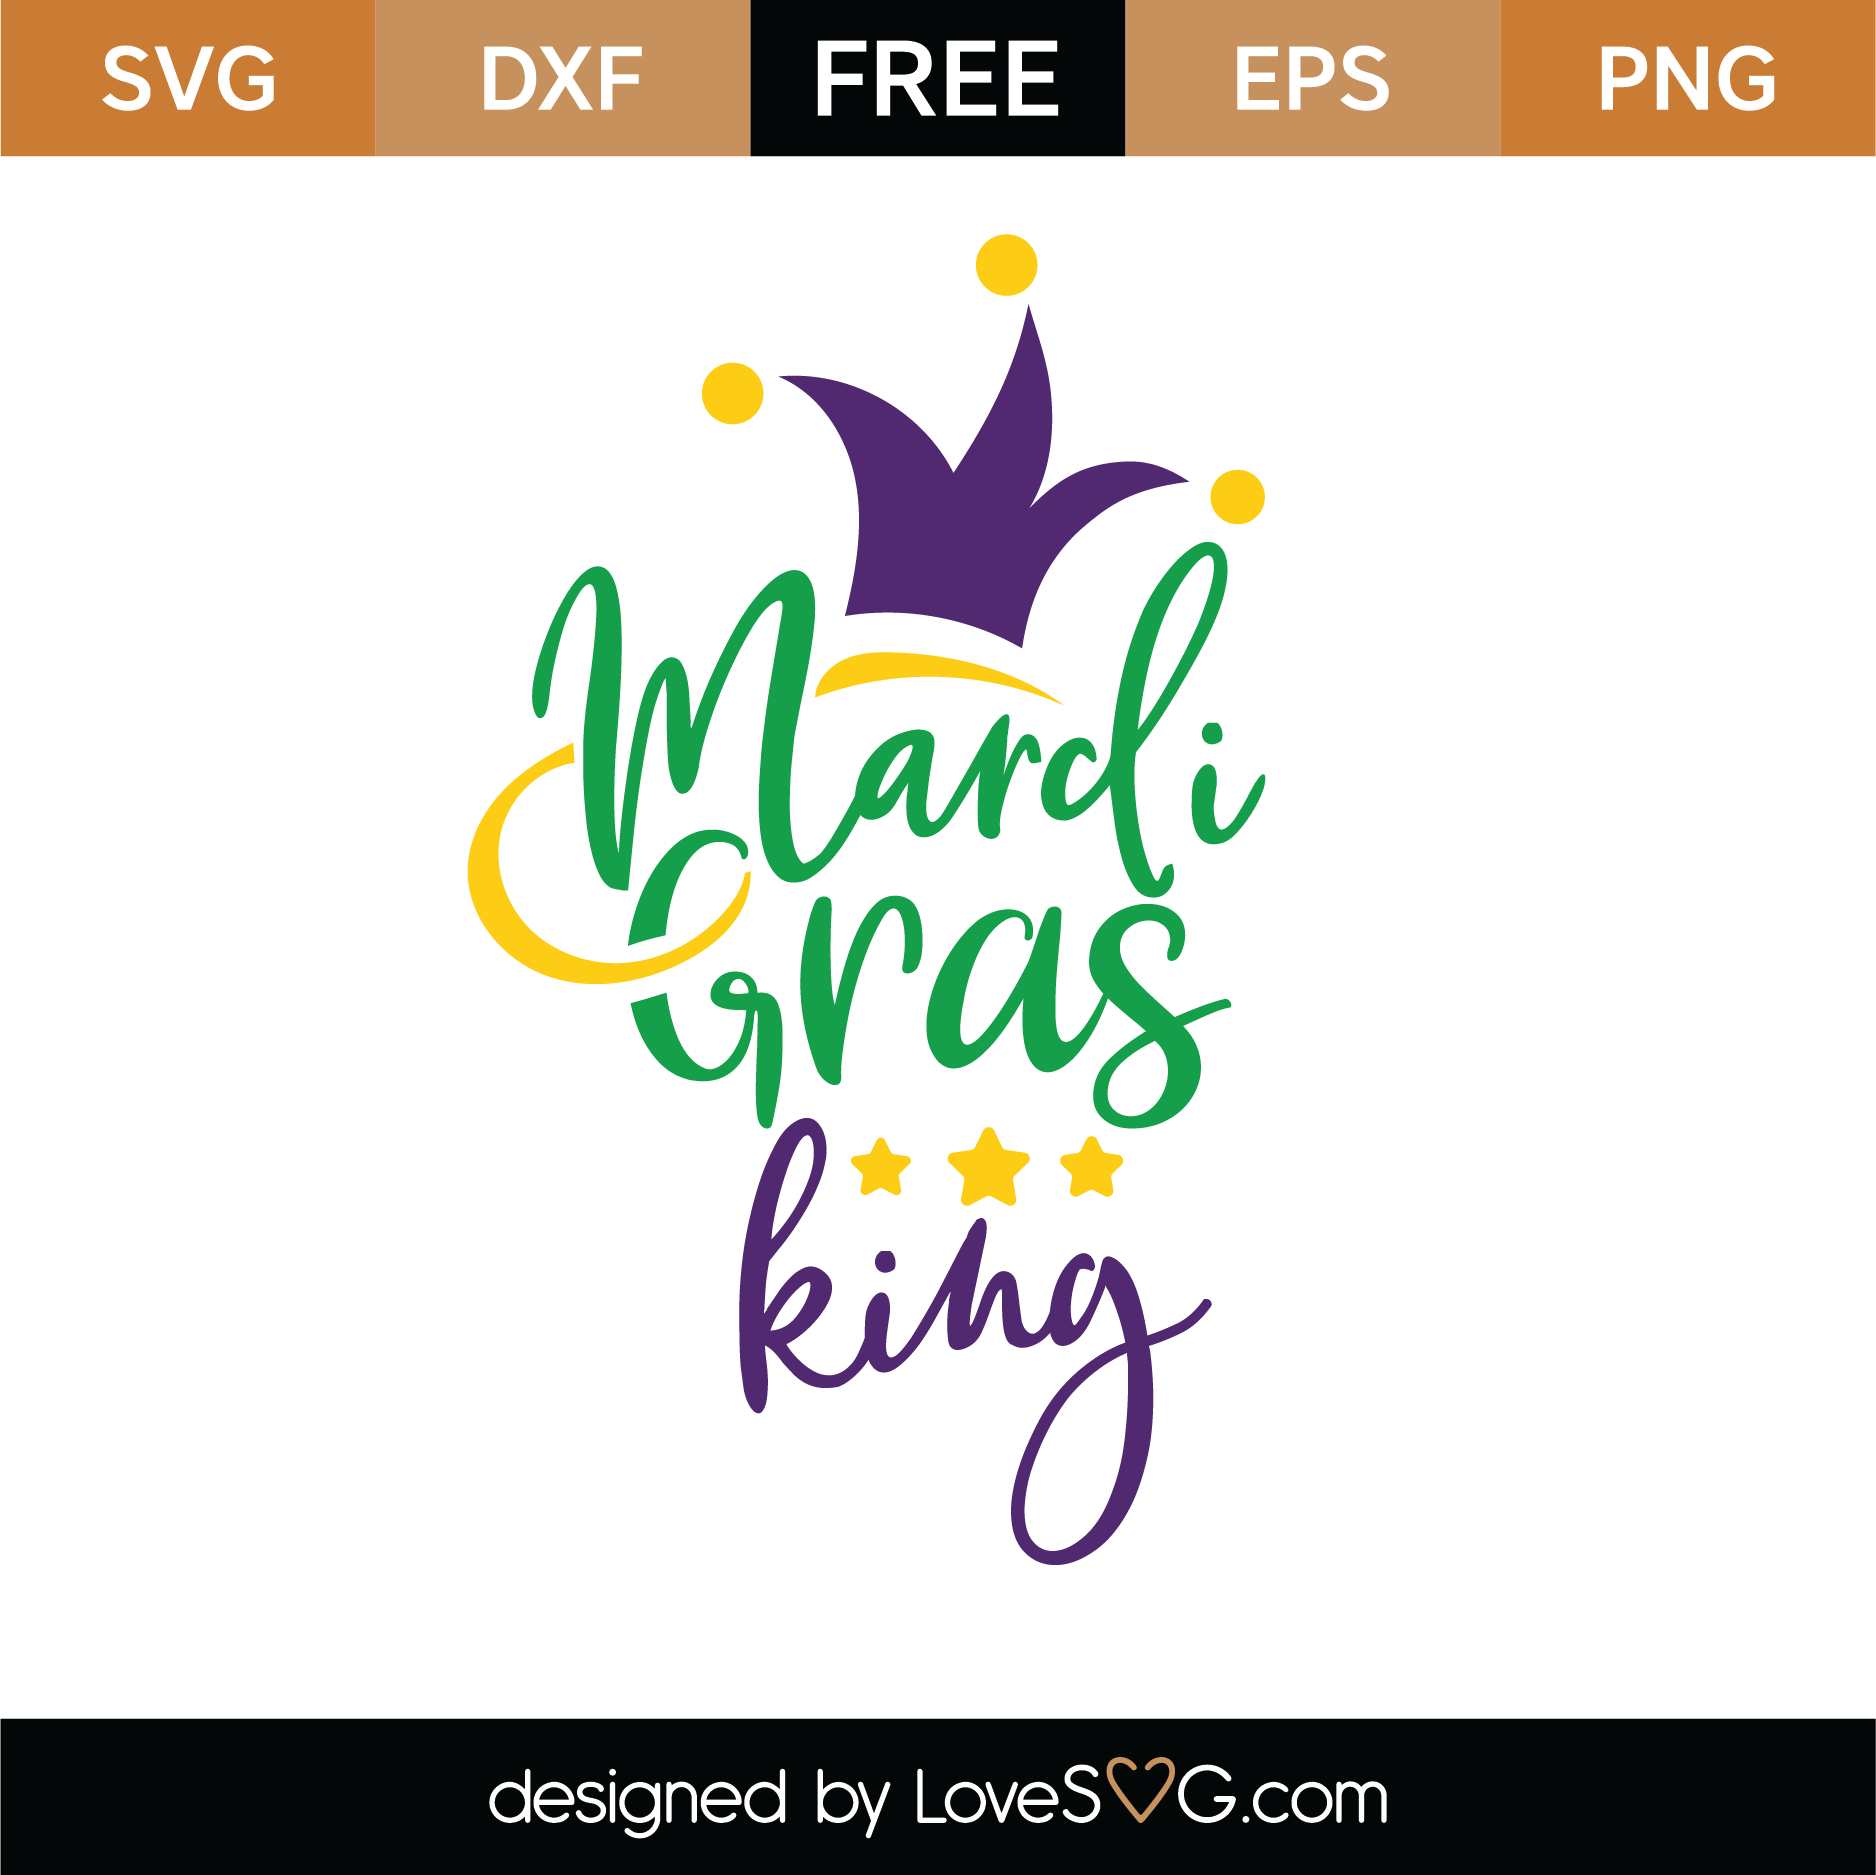 Download Free Mardi Gras King SVG Cut File | Lovesvg.com